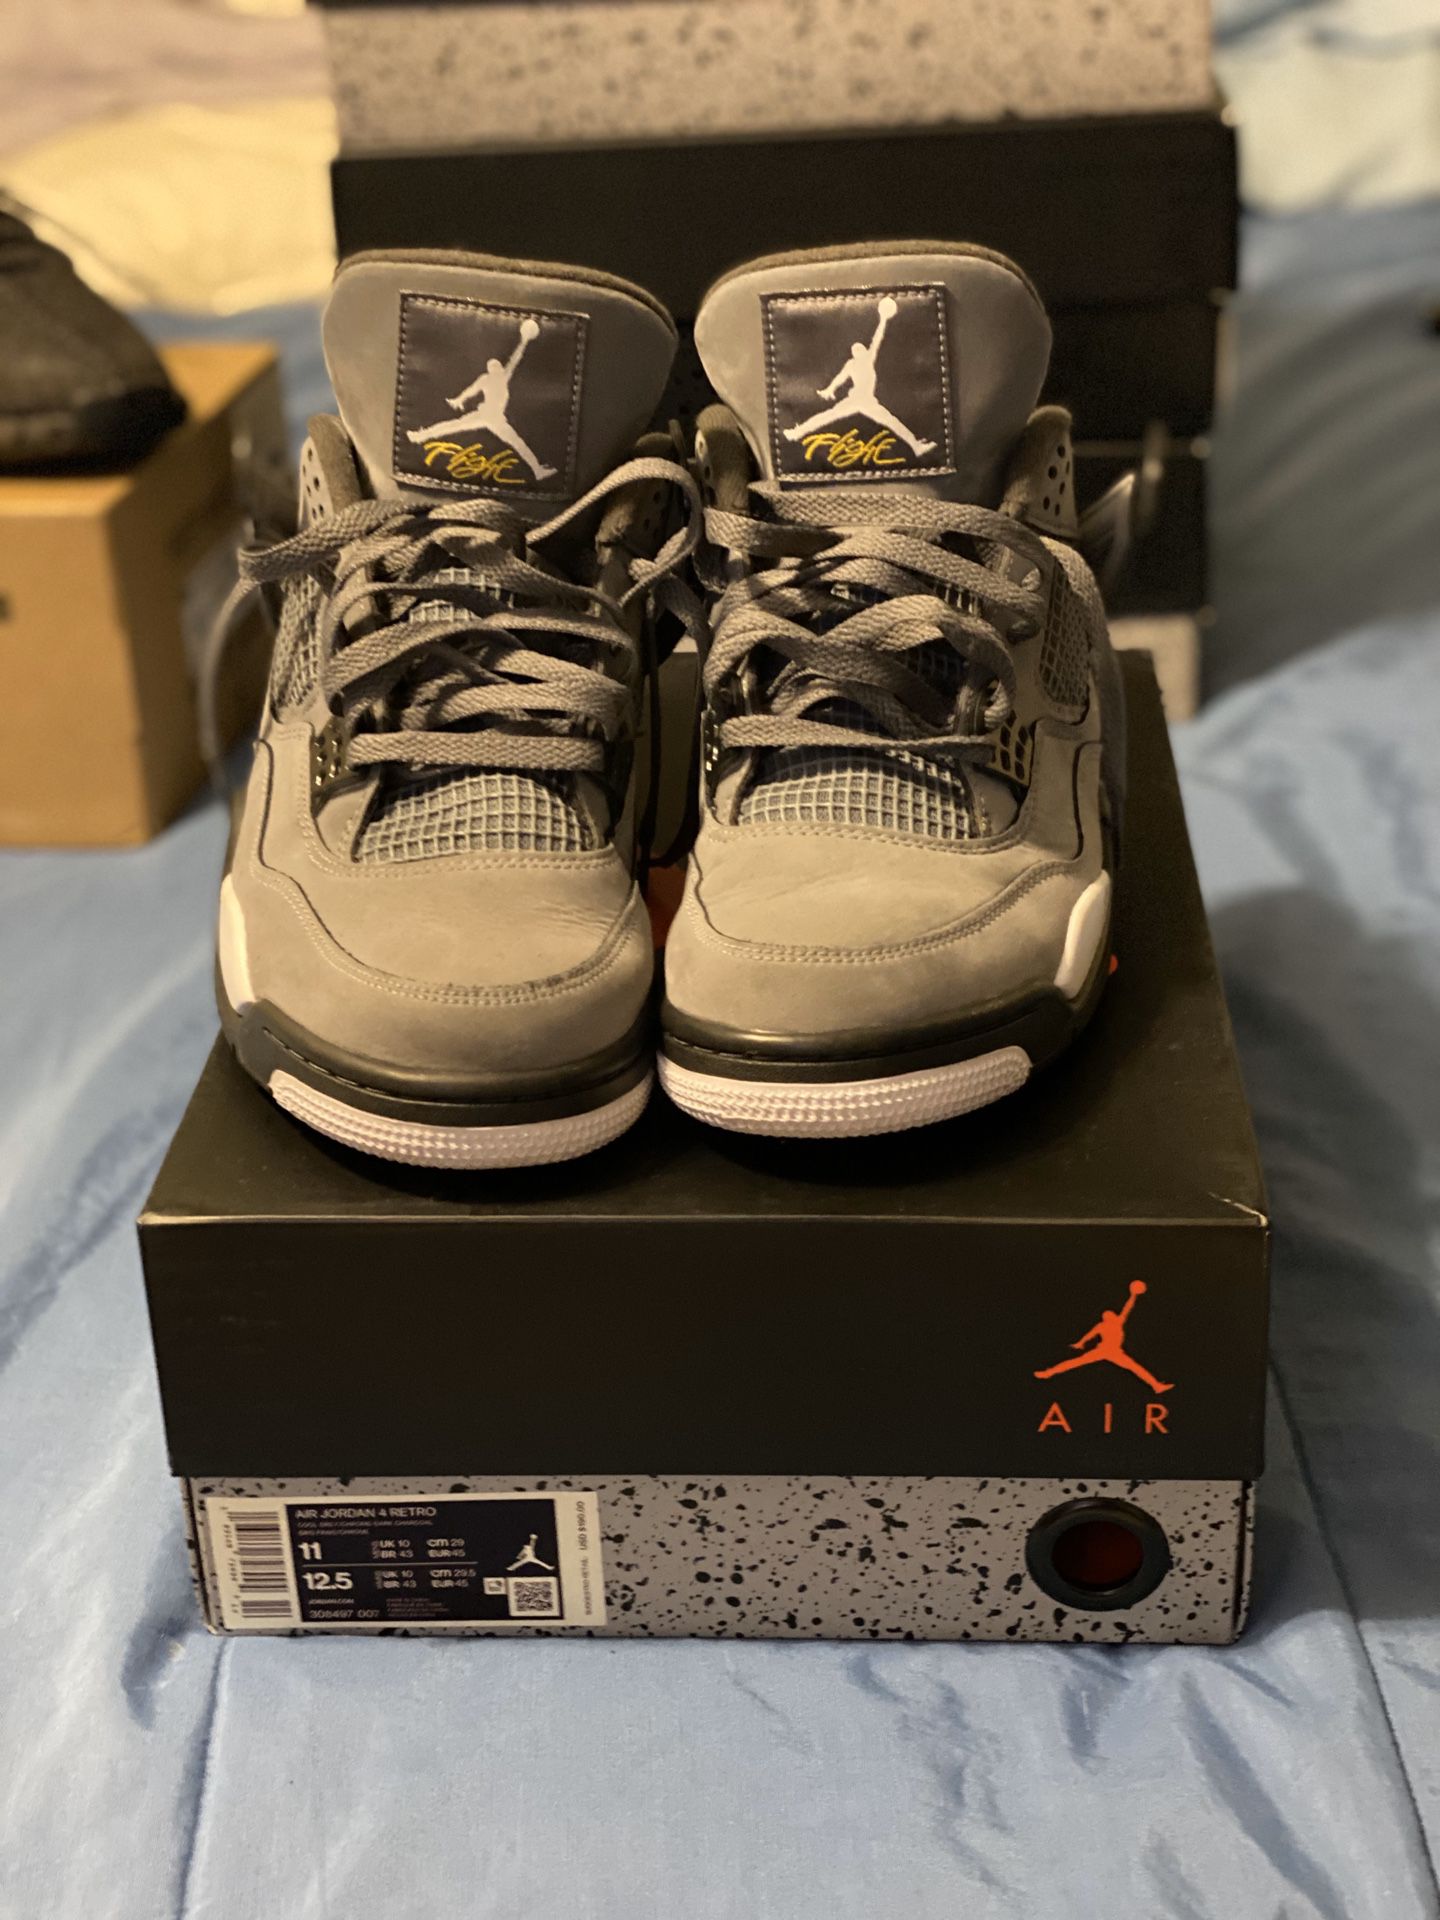 Jordan 4 Cool grey size 11